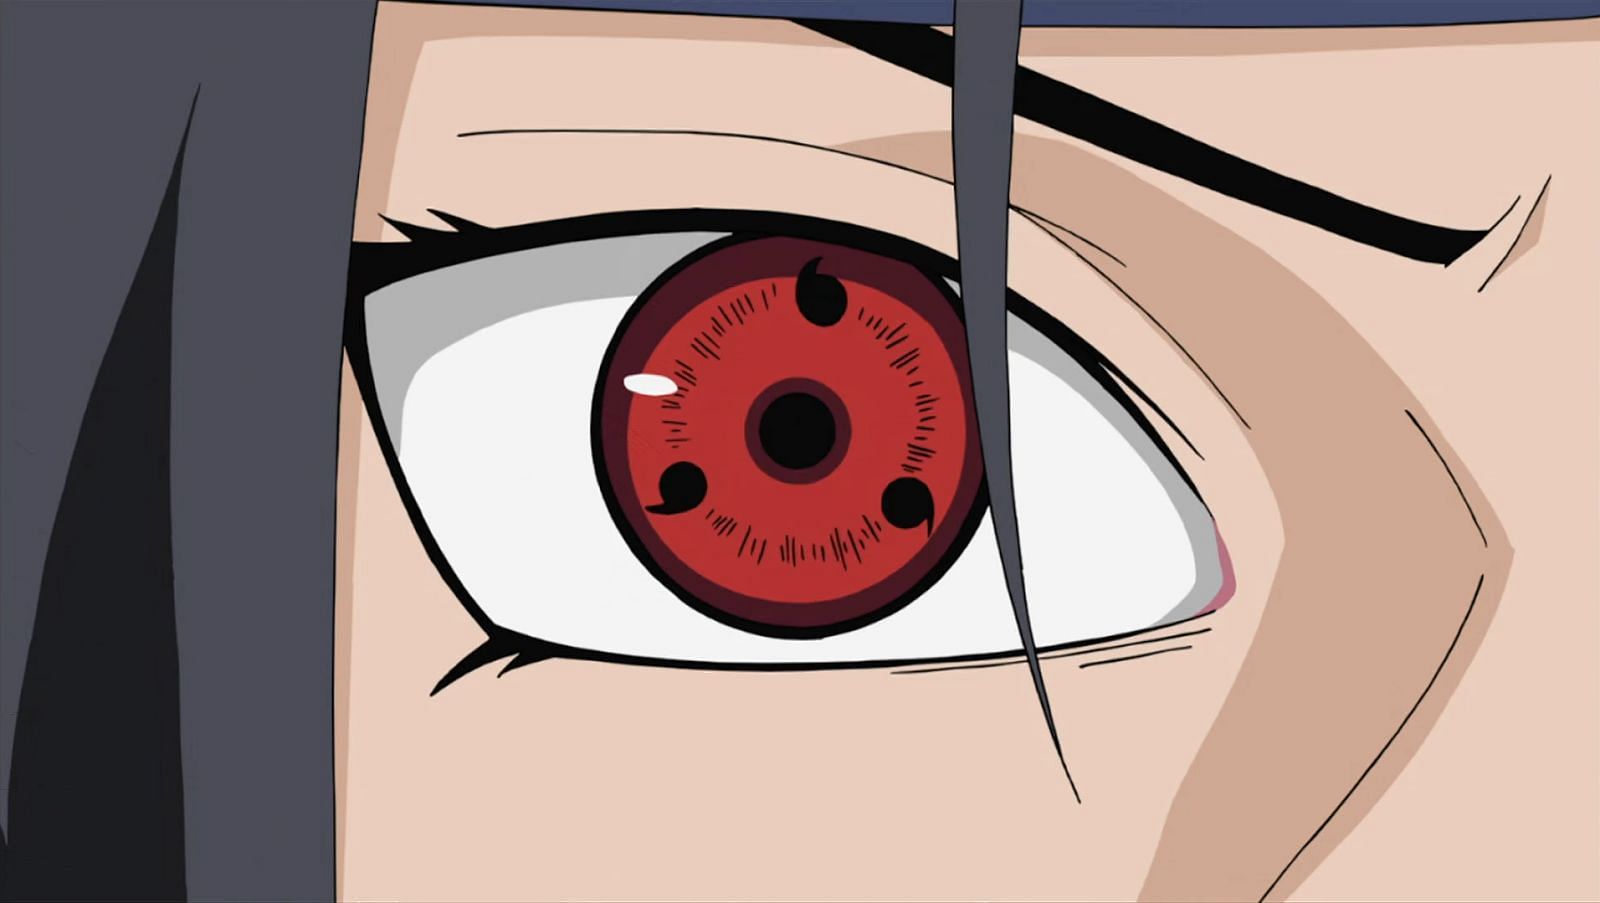 Sharingan with three tomoe as seen in Naruto anime (Image via Studio Pierrot)